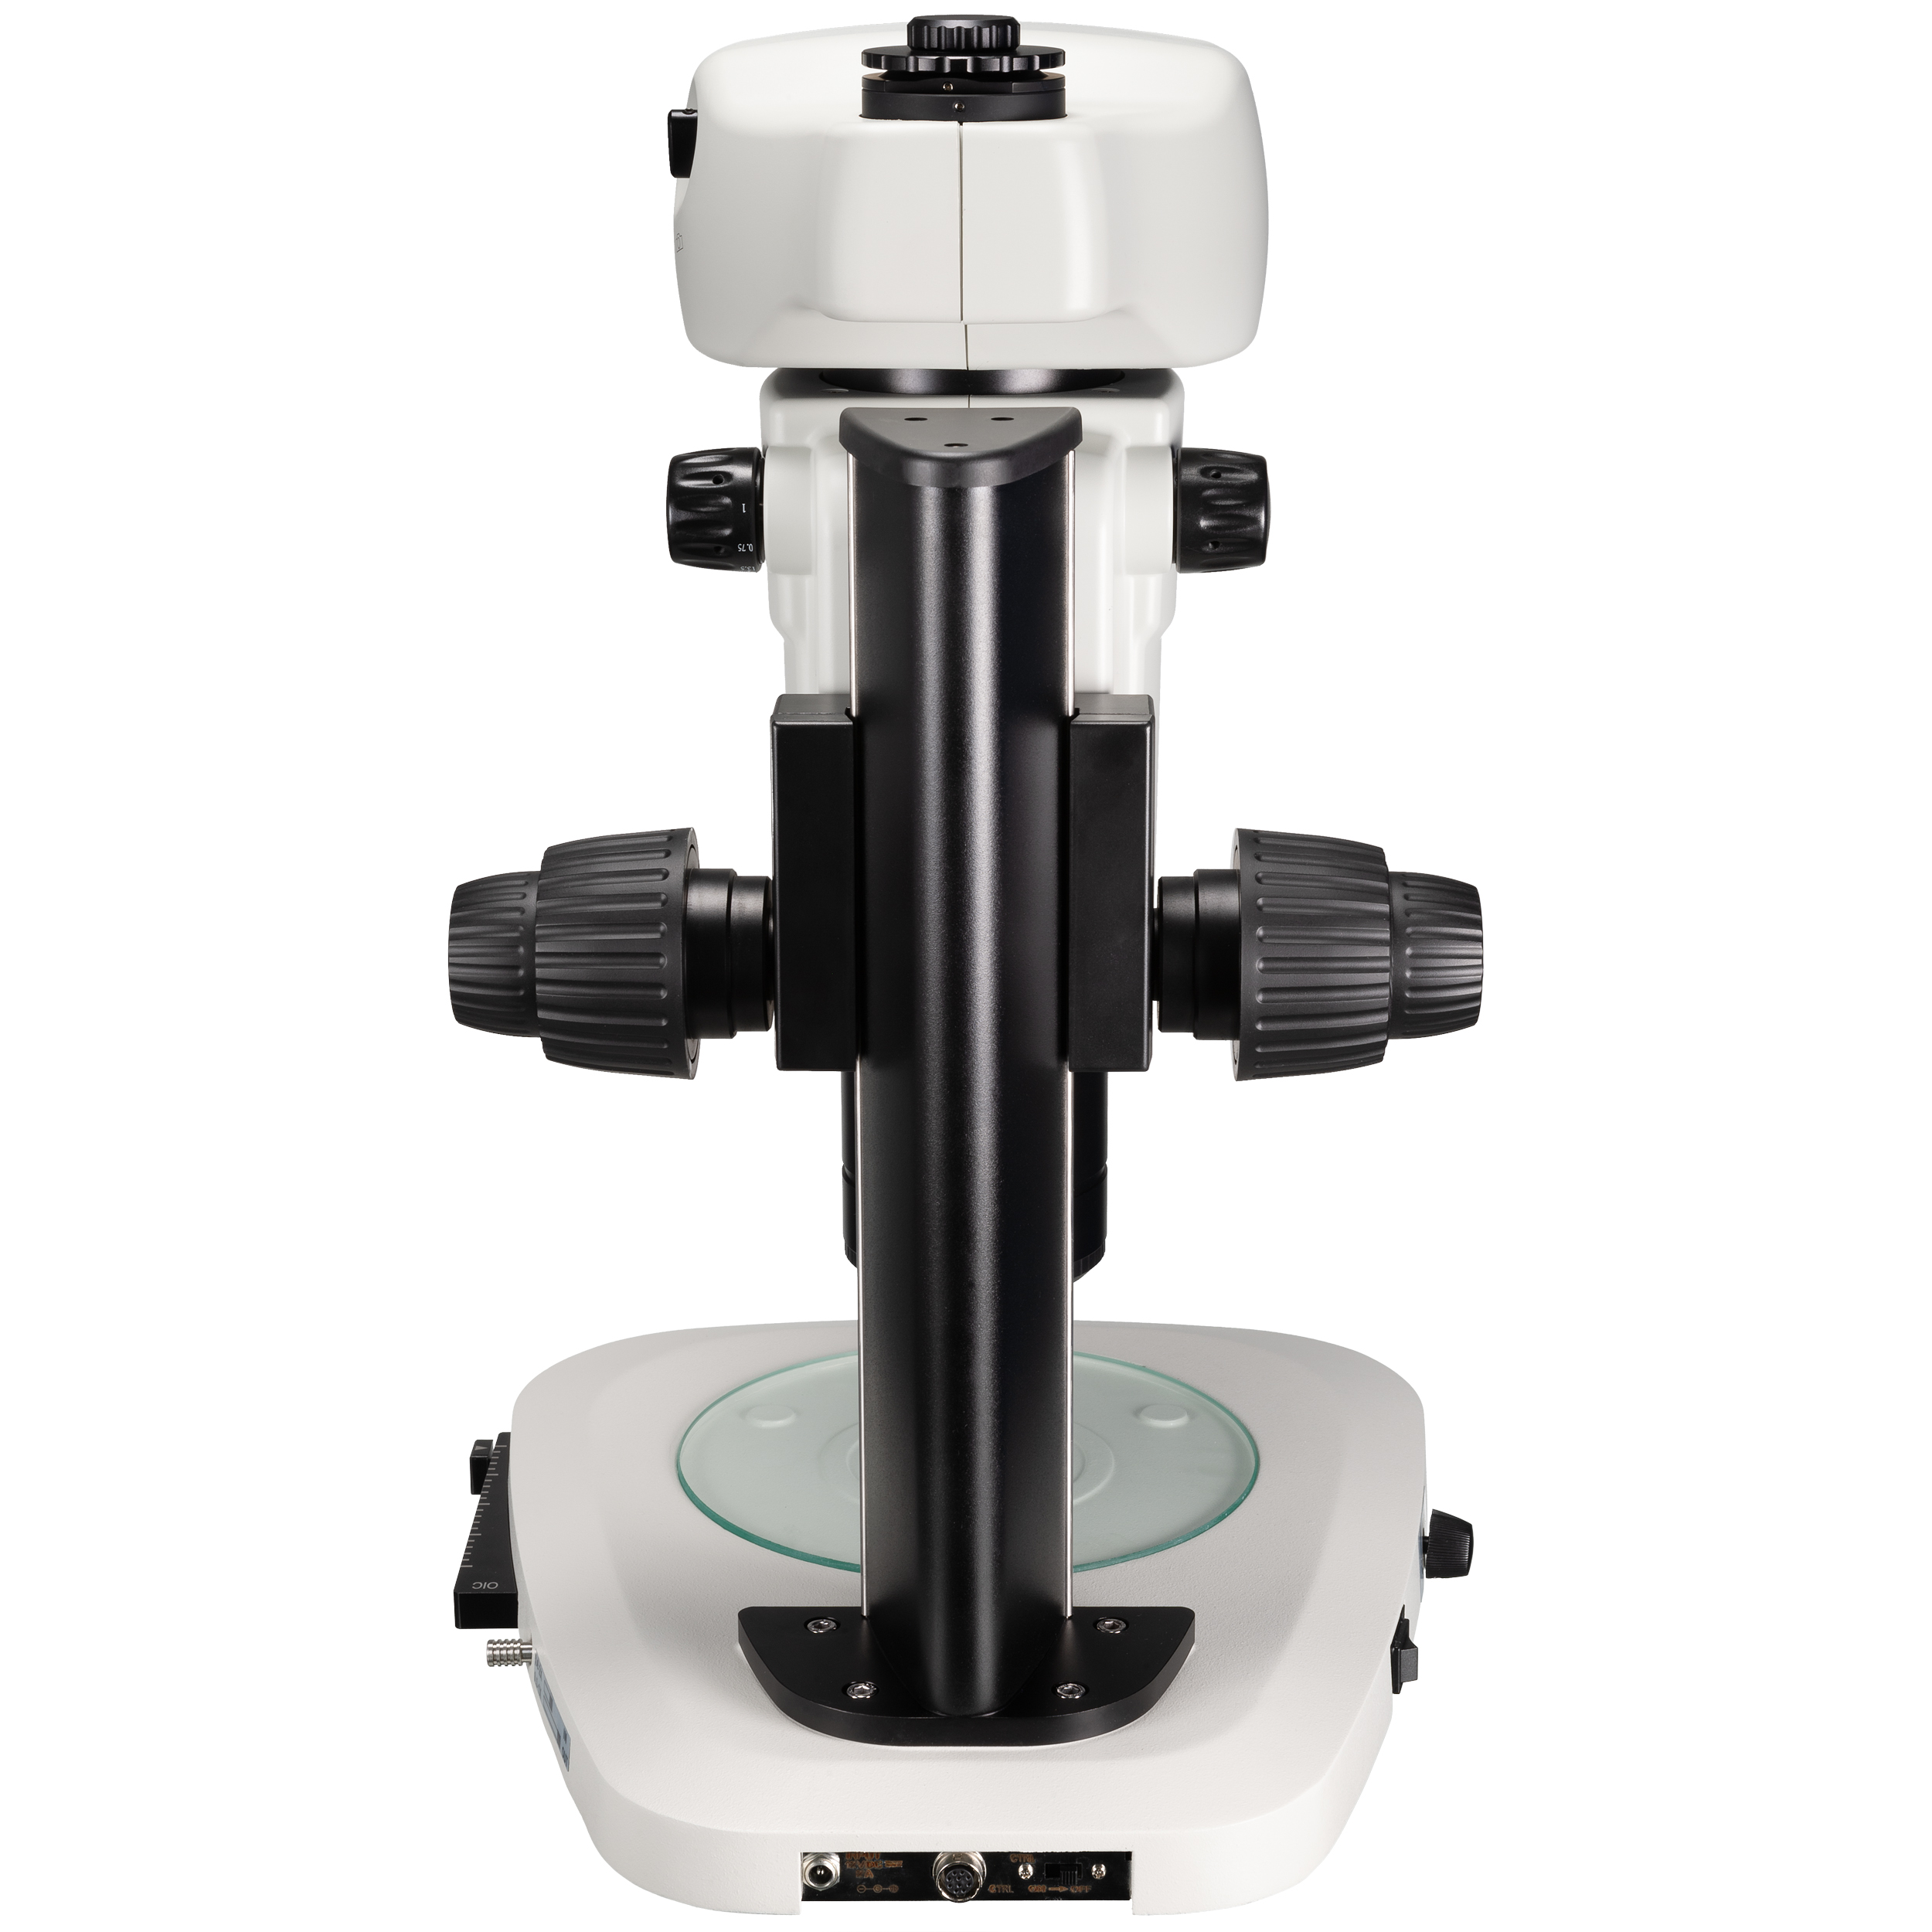 Nexcope NSZ818 professionelles Stereomikroskop mit 18:1 Zoom